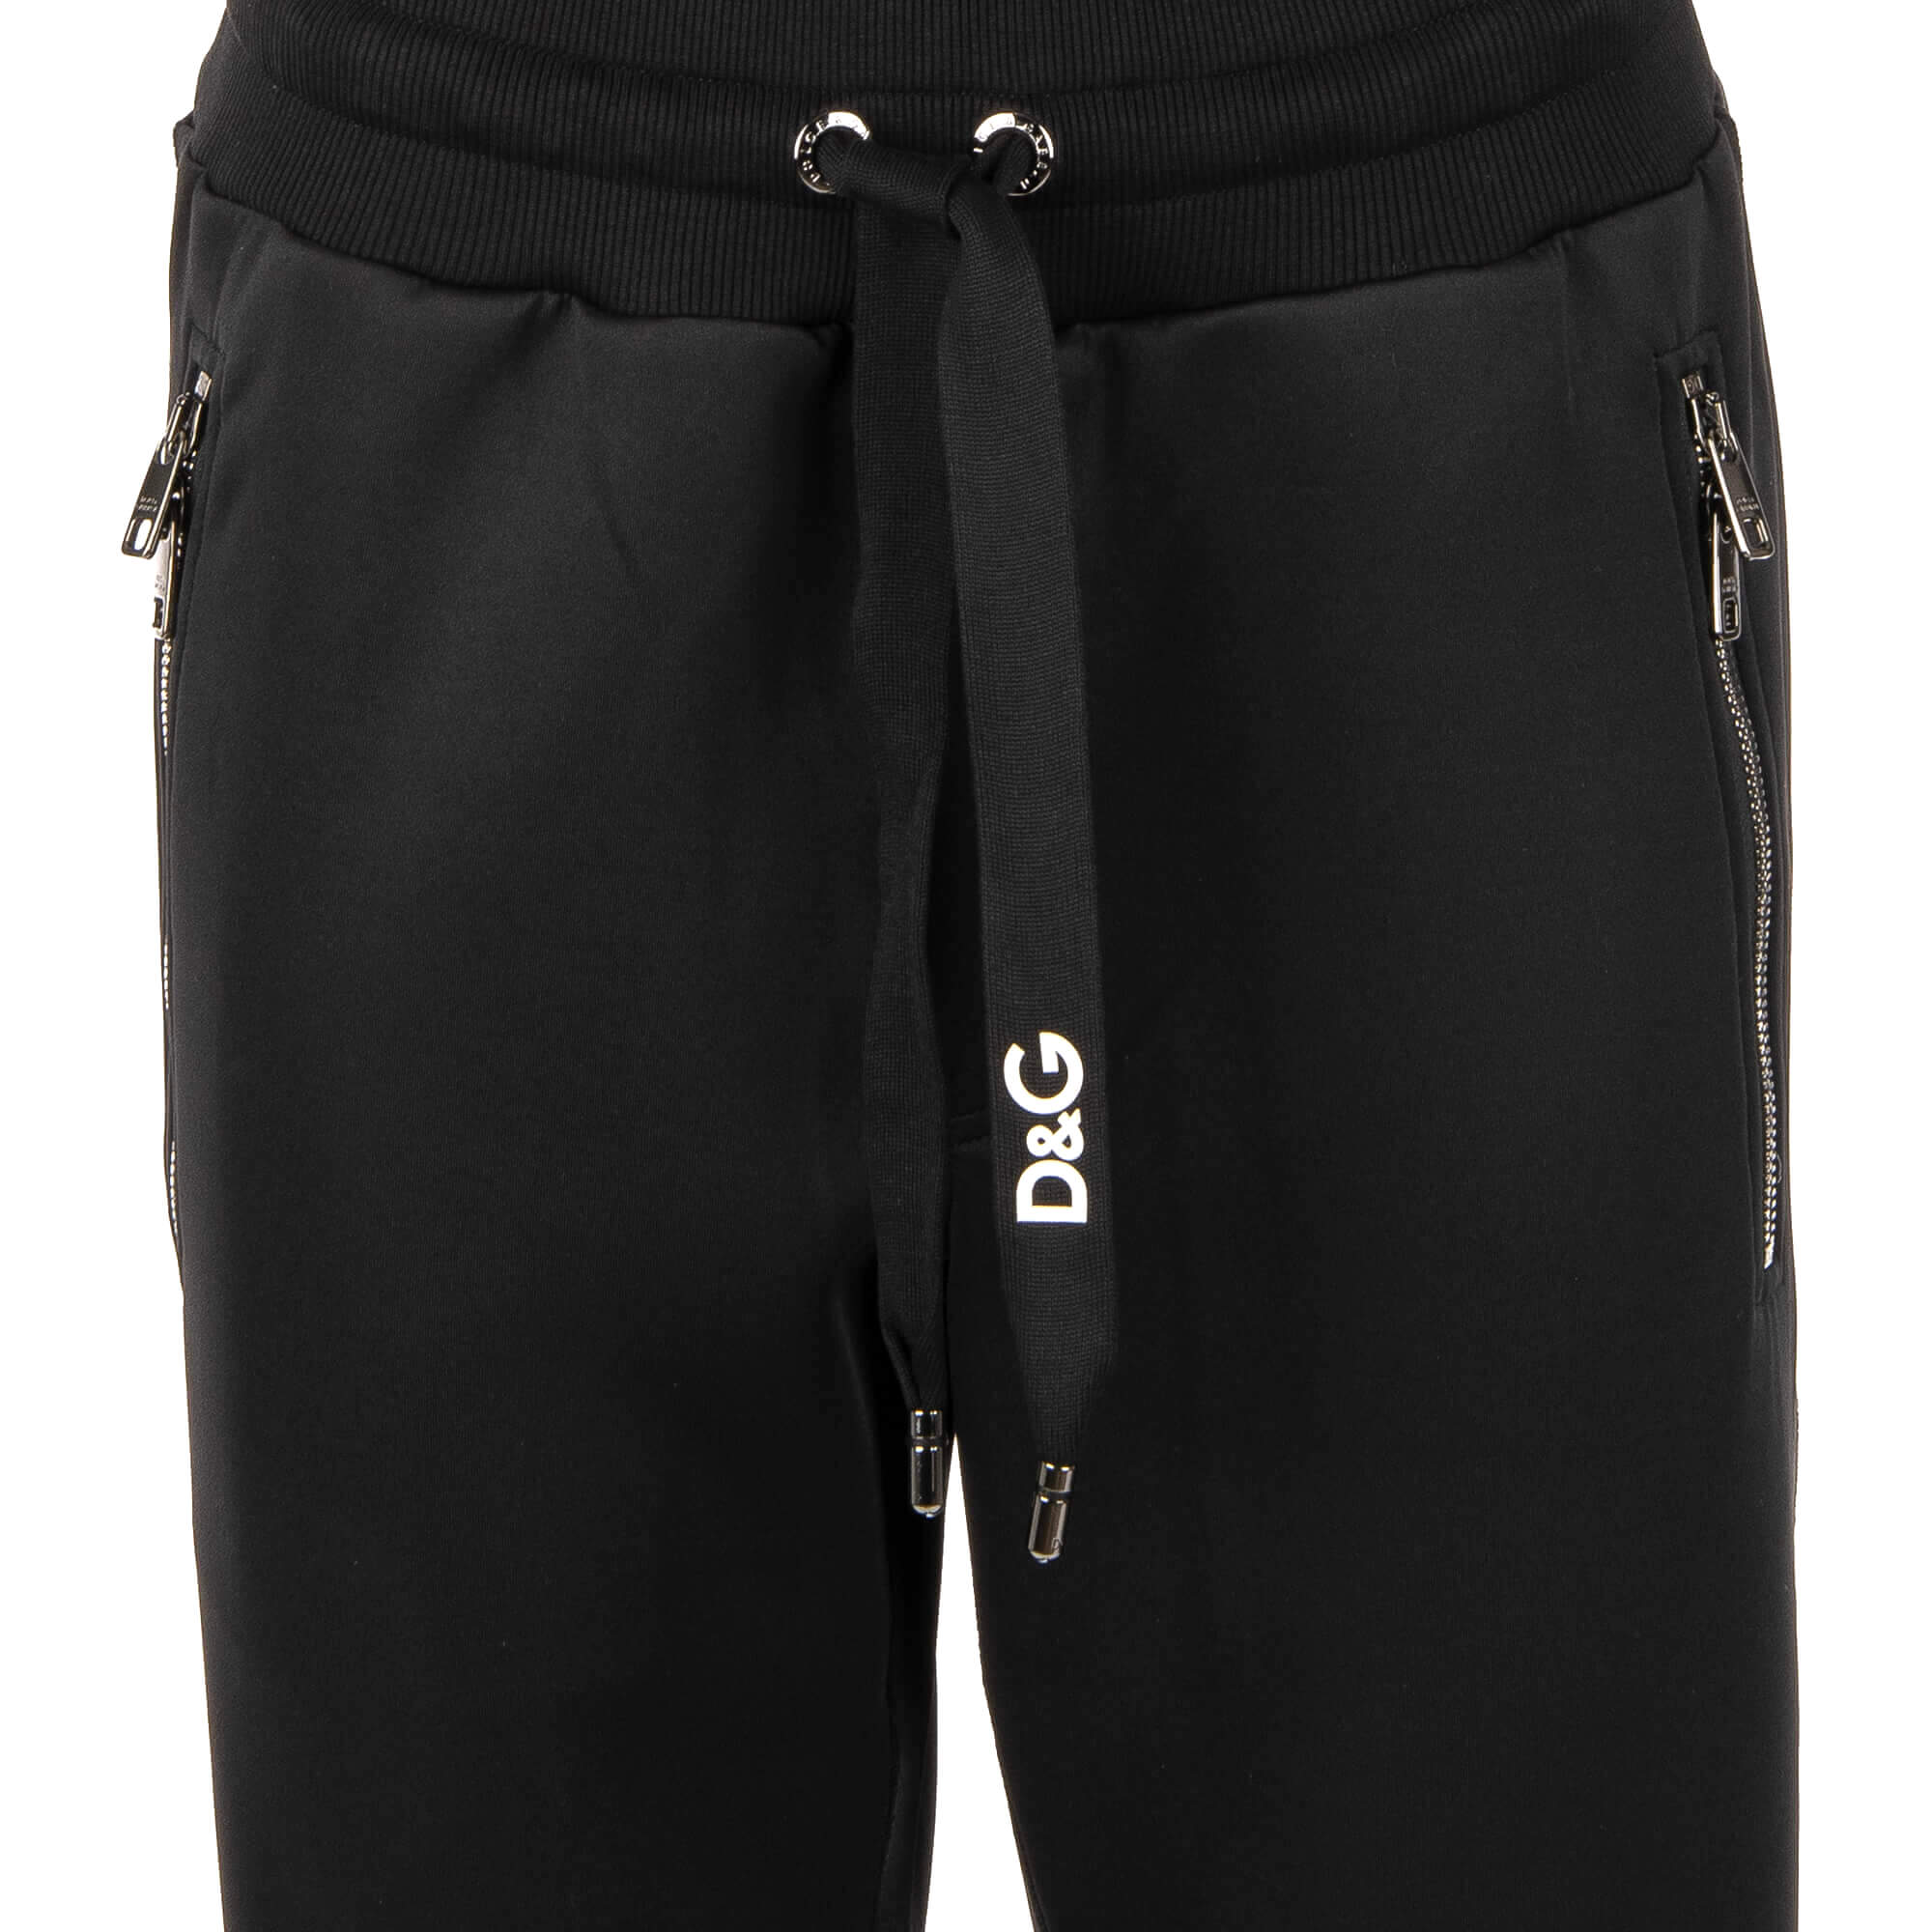 Dolce & Gabbana Men's Pants and Shorts - Black - Sweatpants